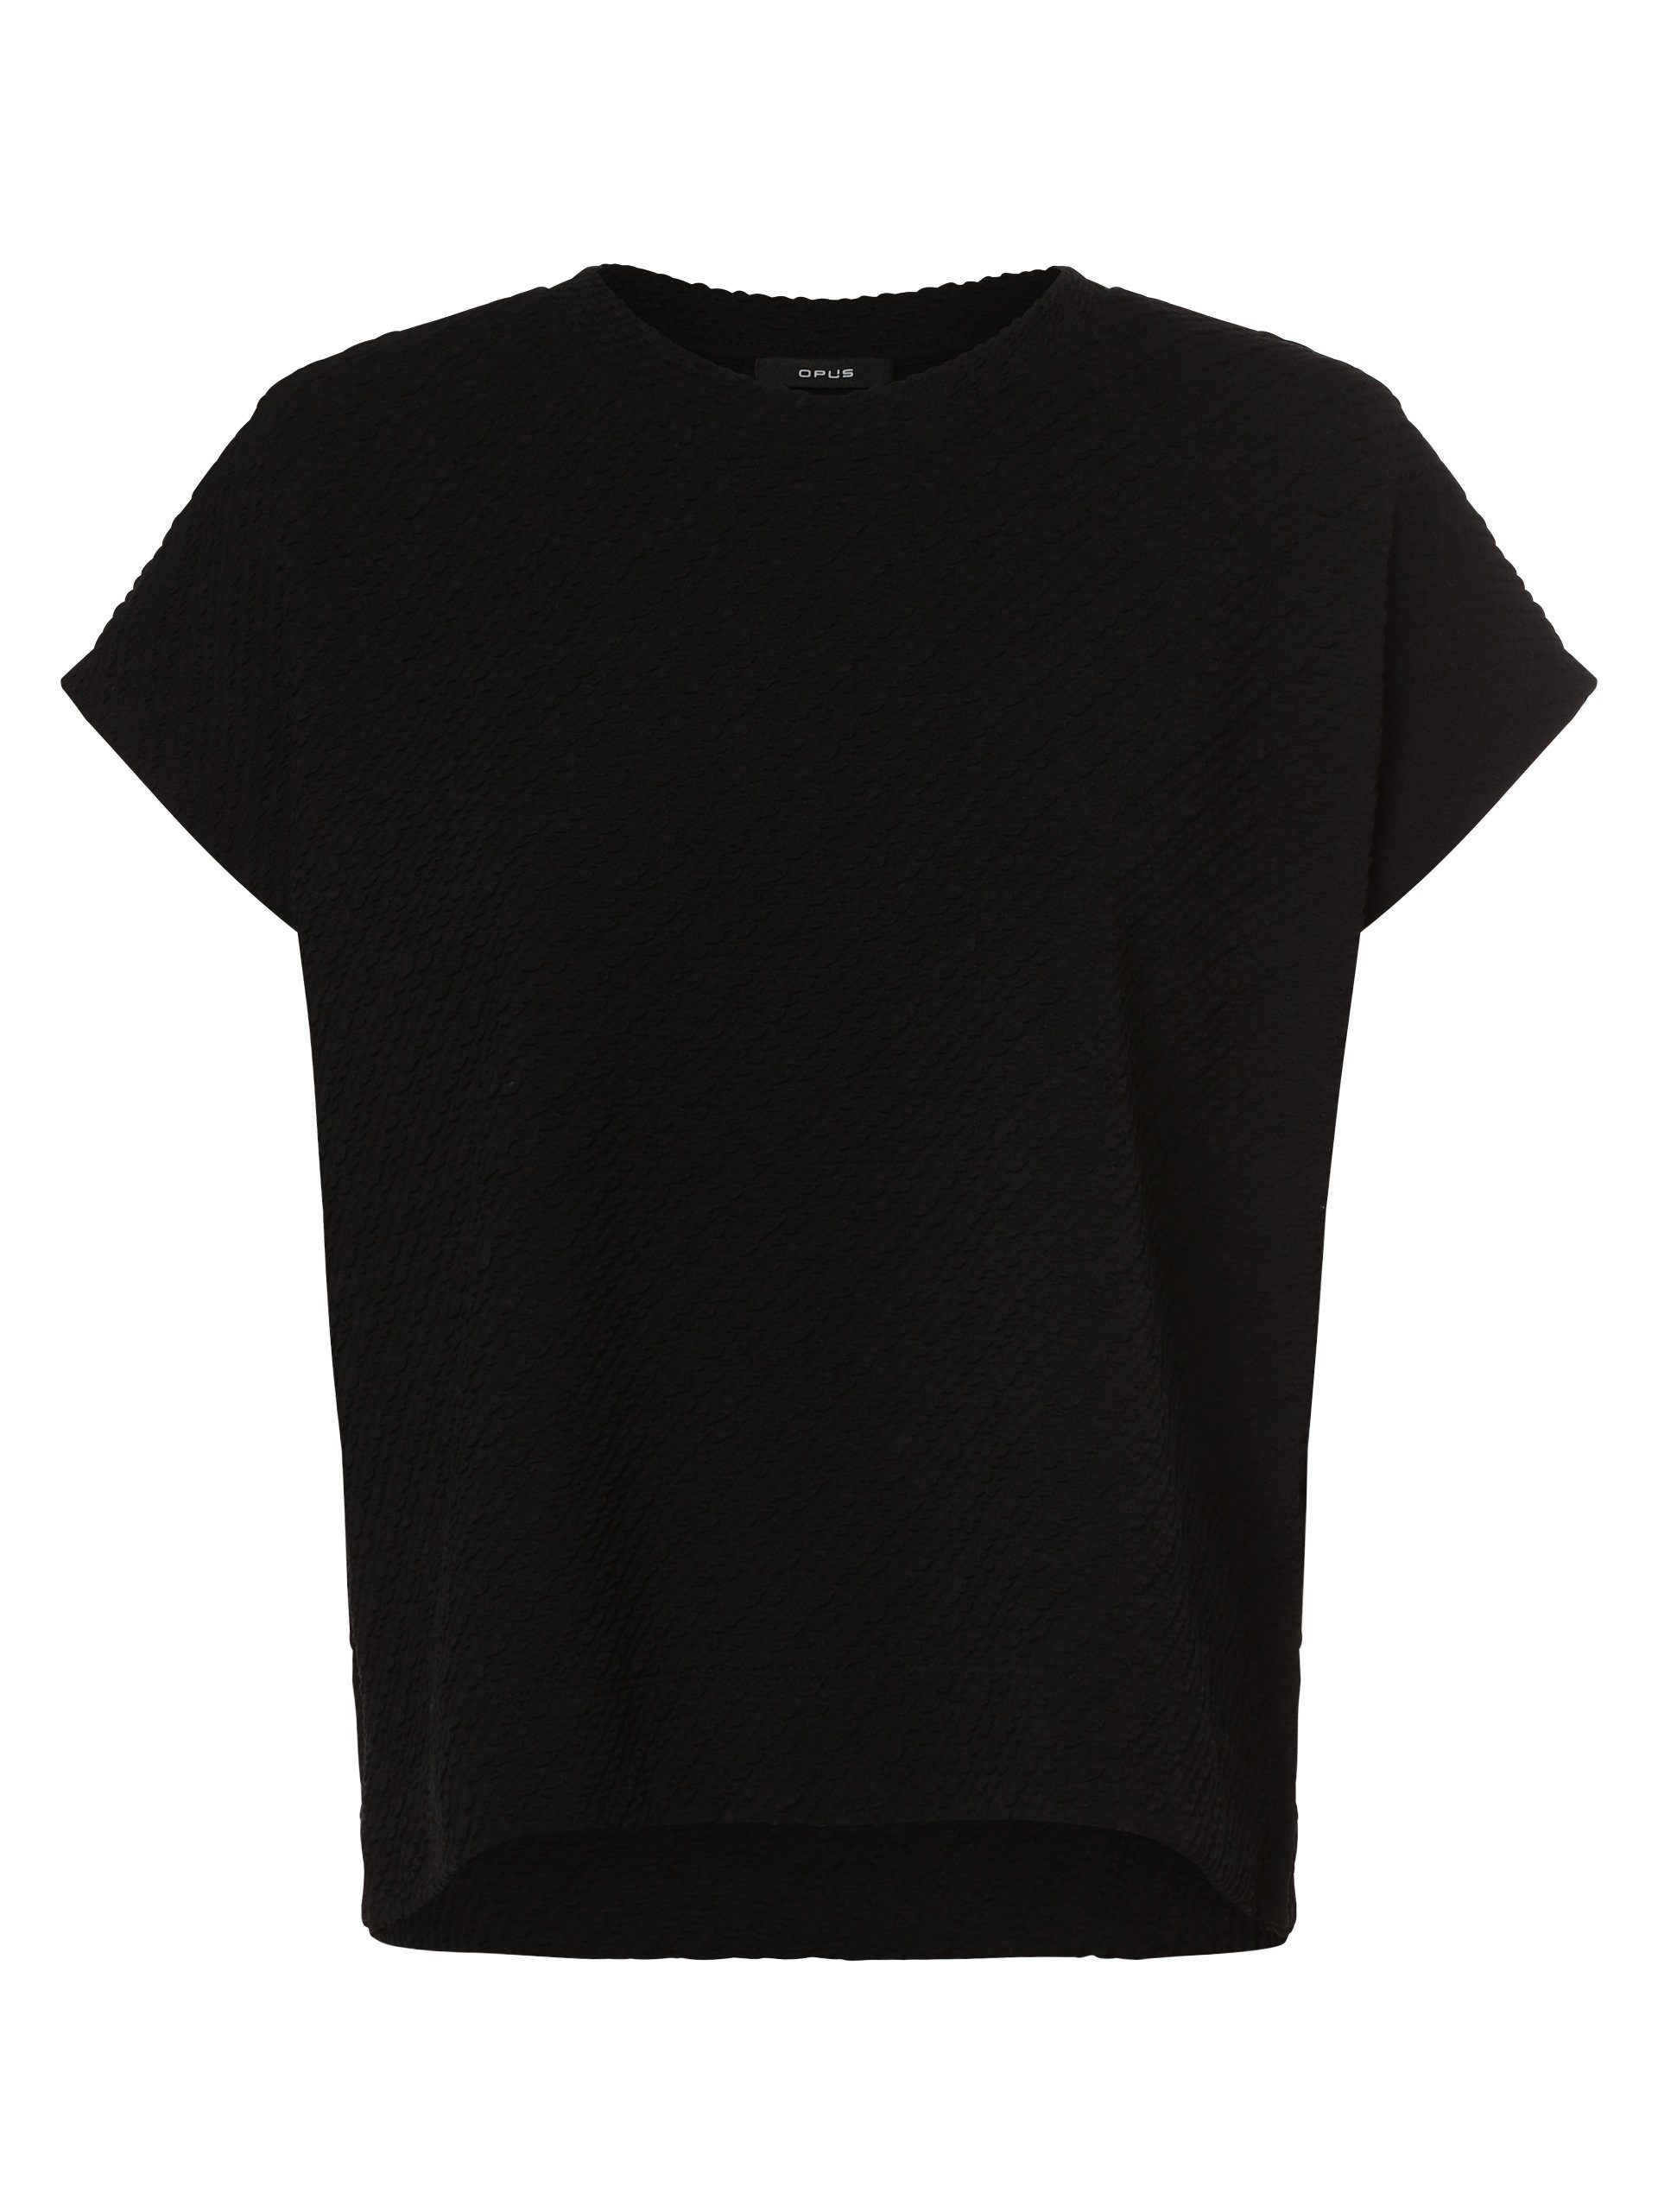 OPUS 900 Sweatshirt black Gularu